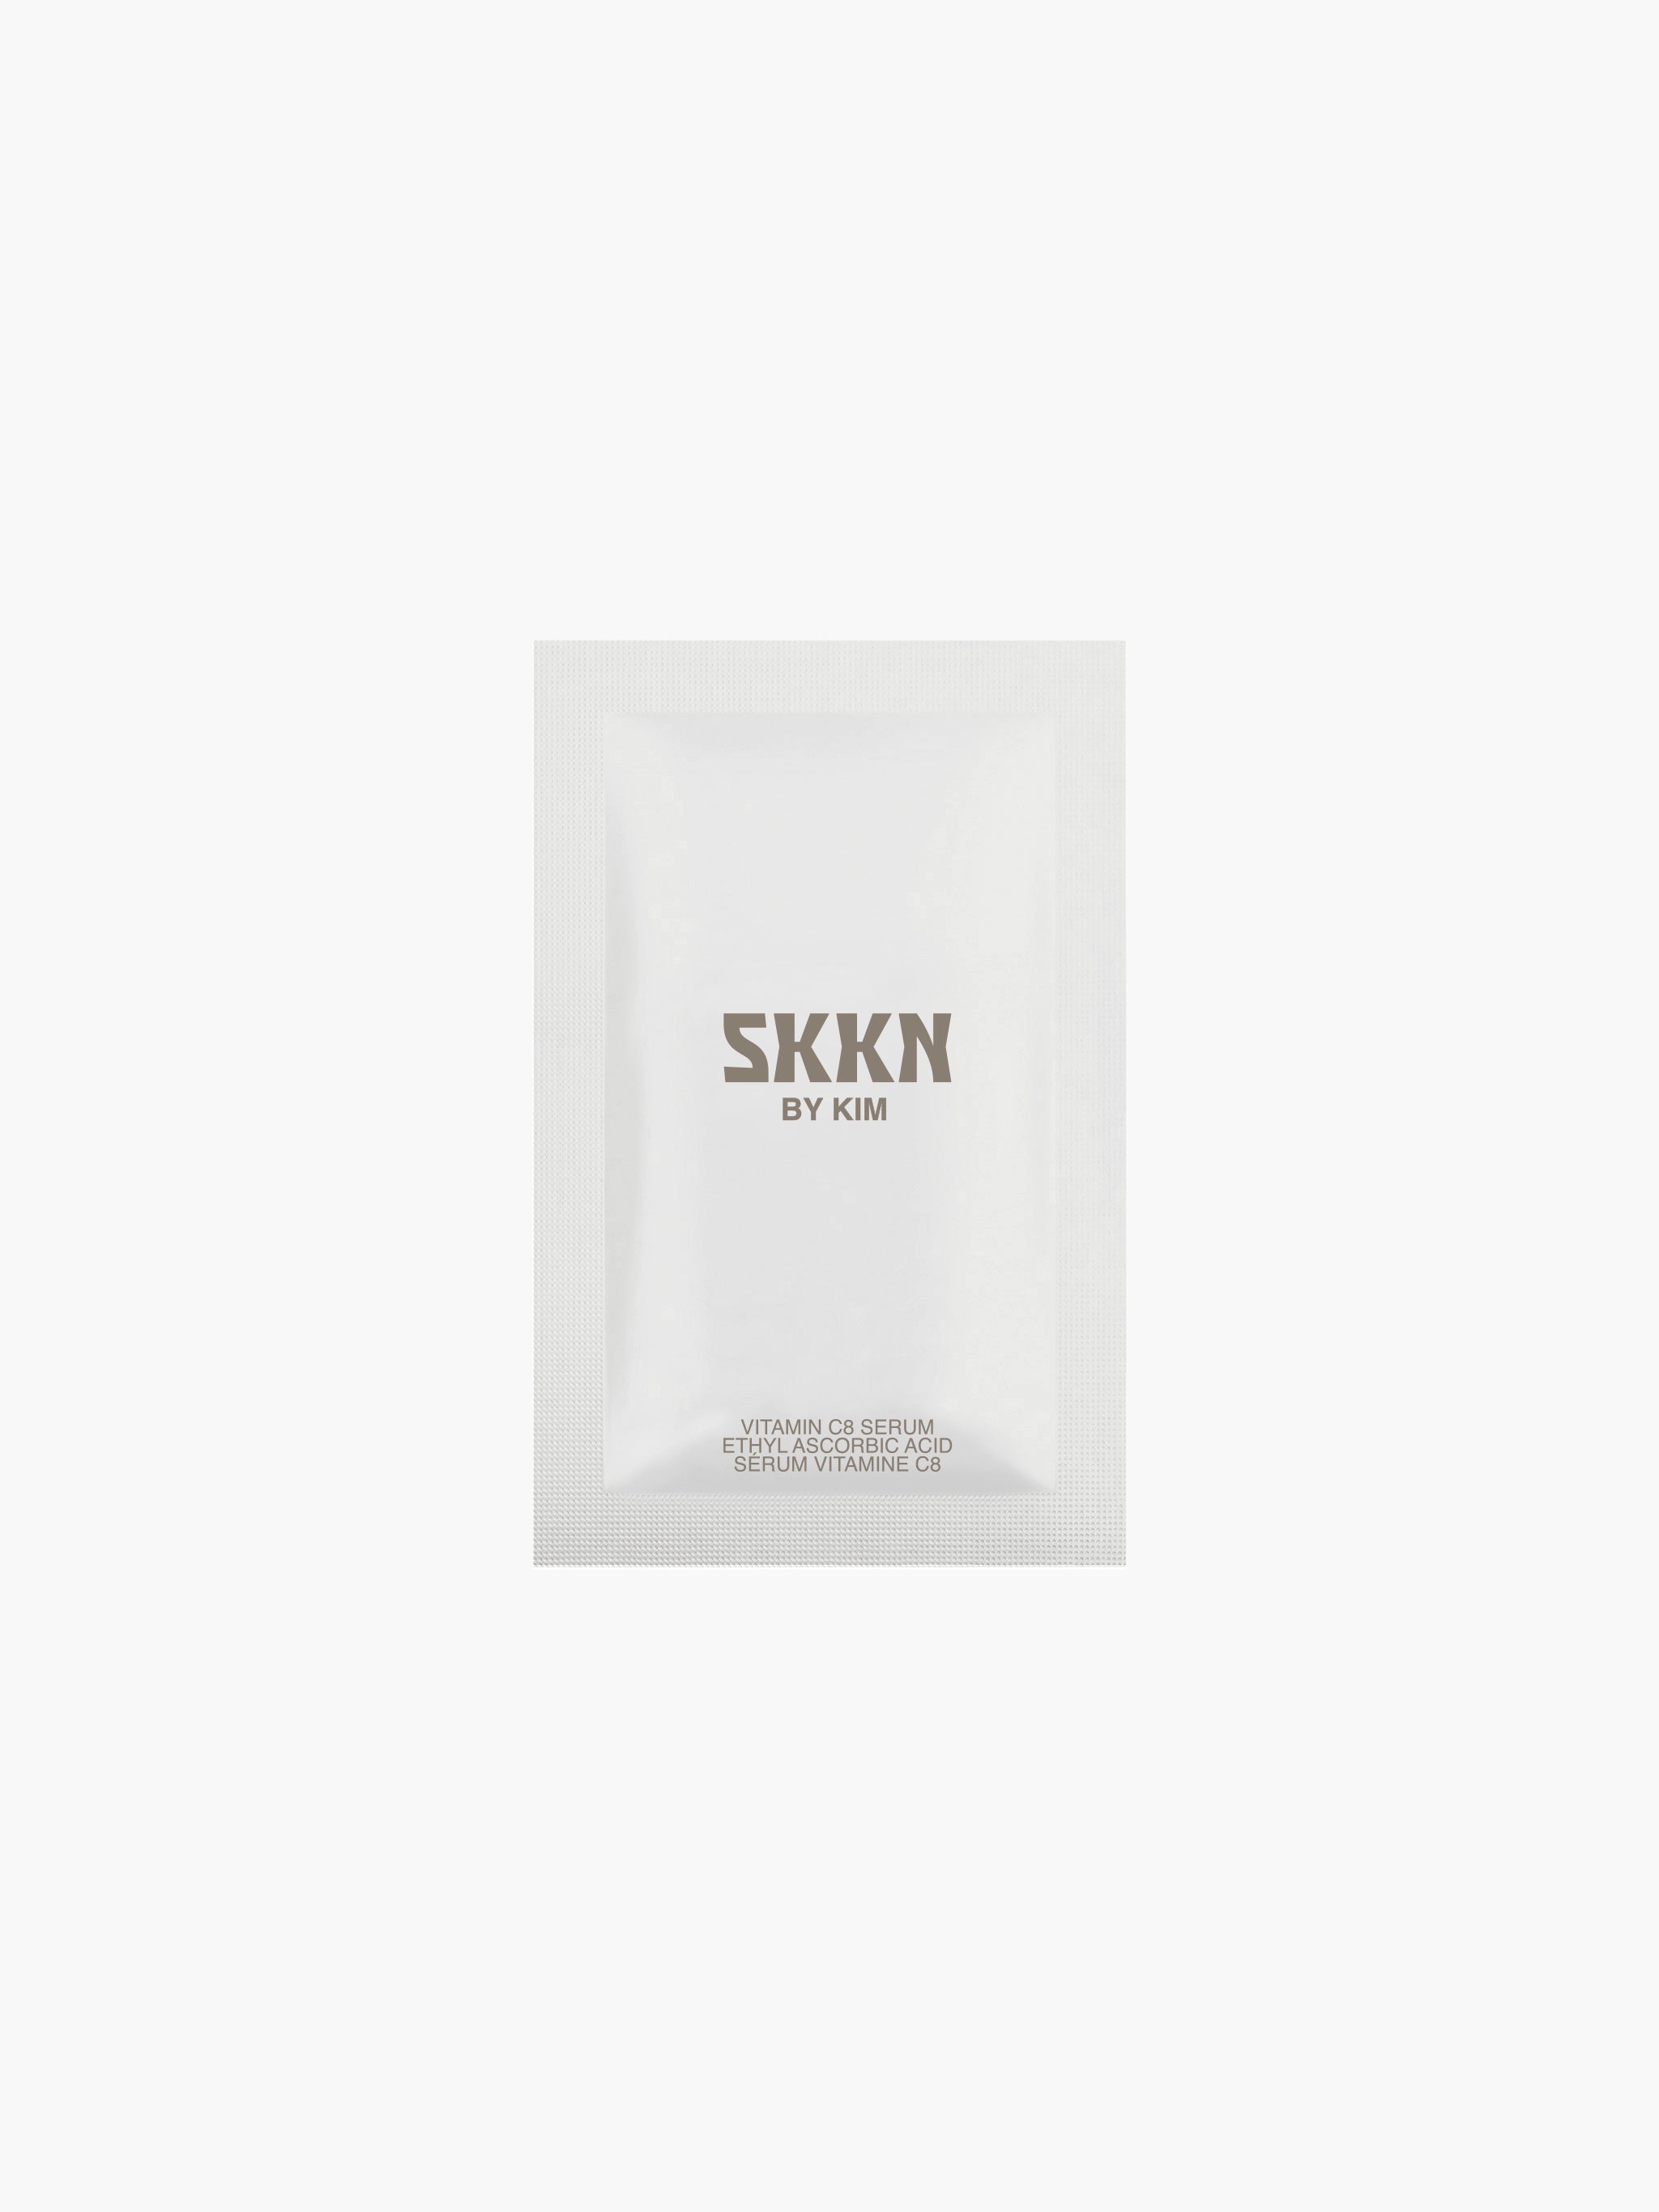 SKKN BY KIM Vitamin C8 Serum Sample